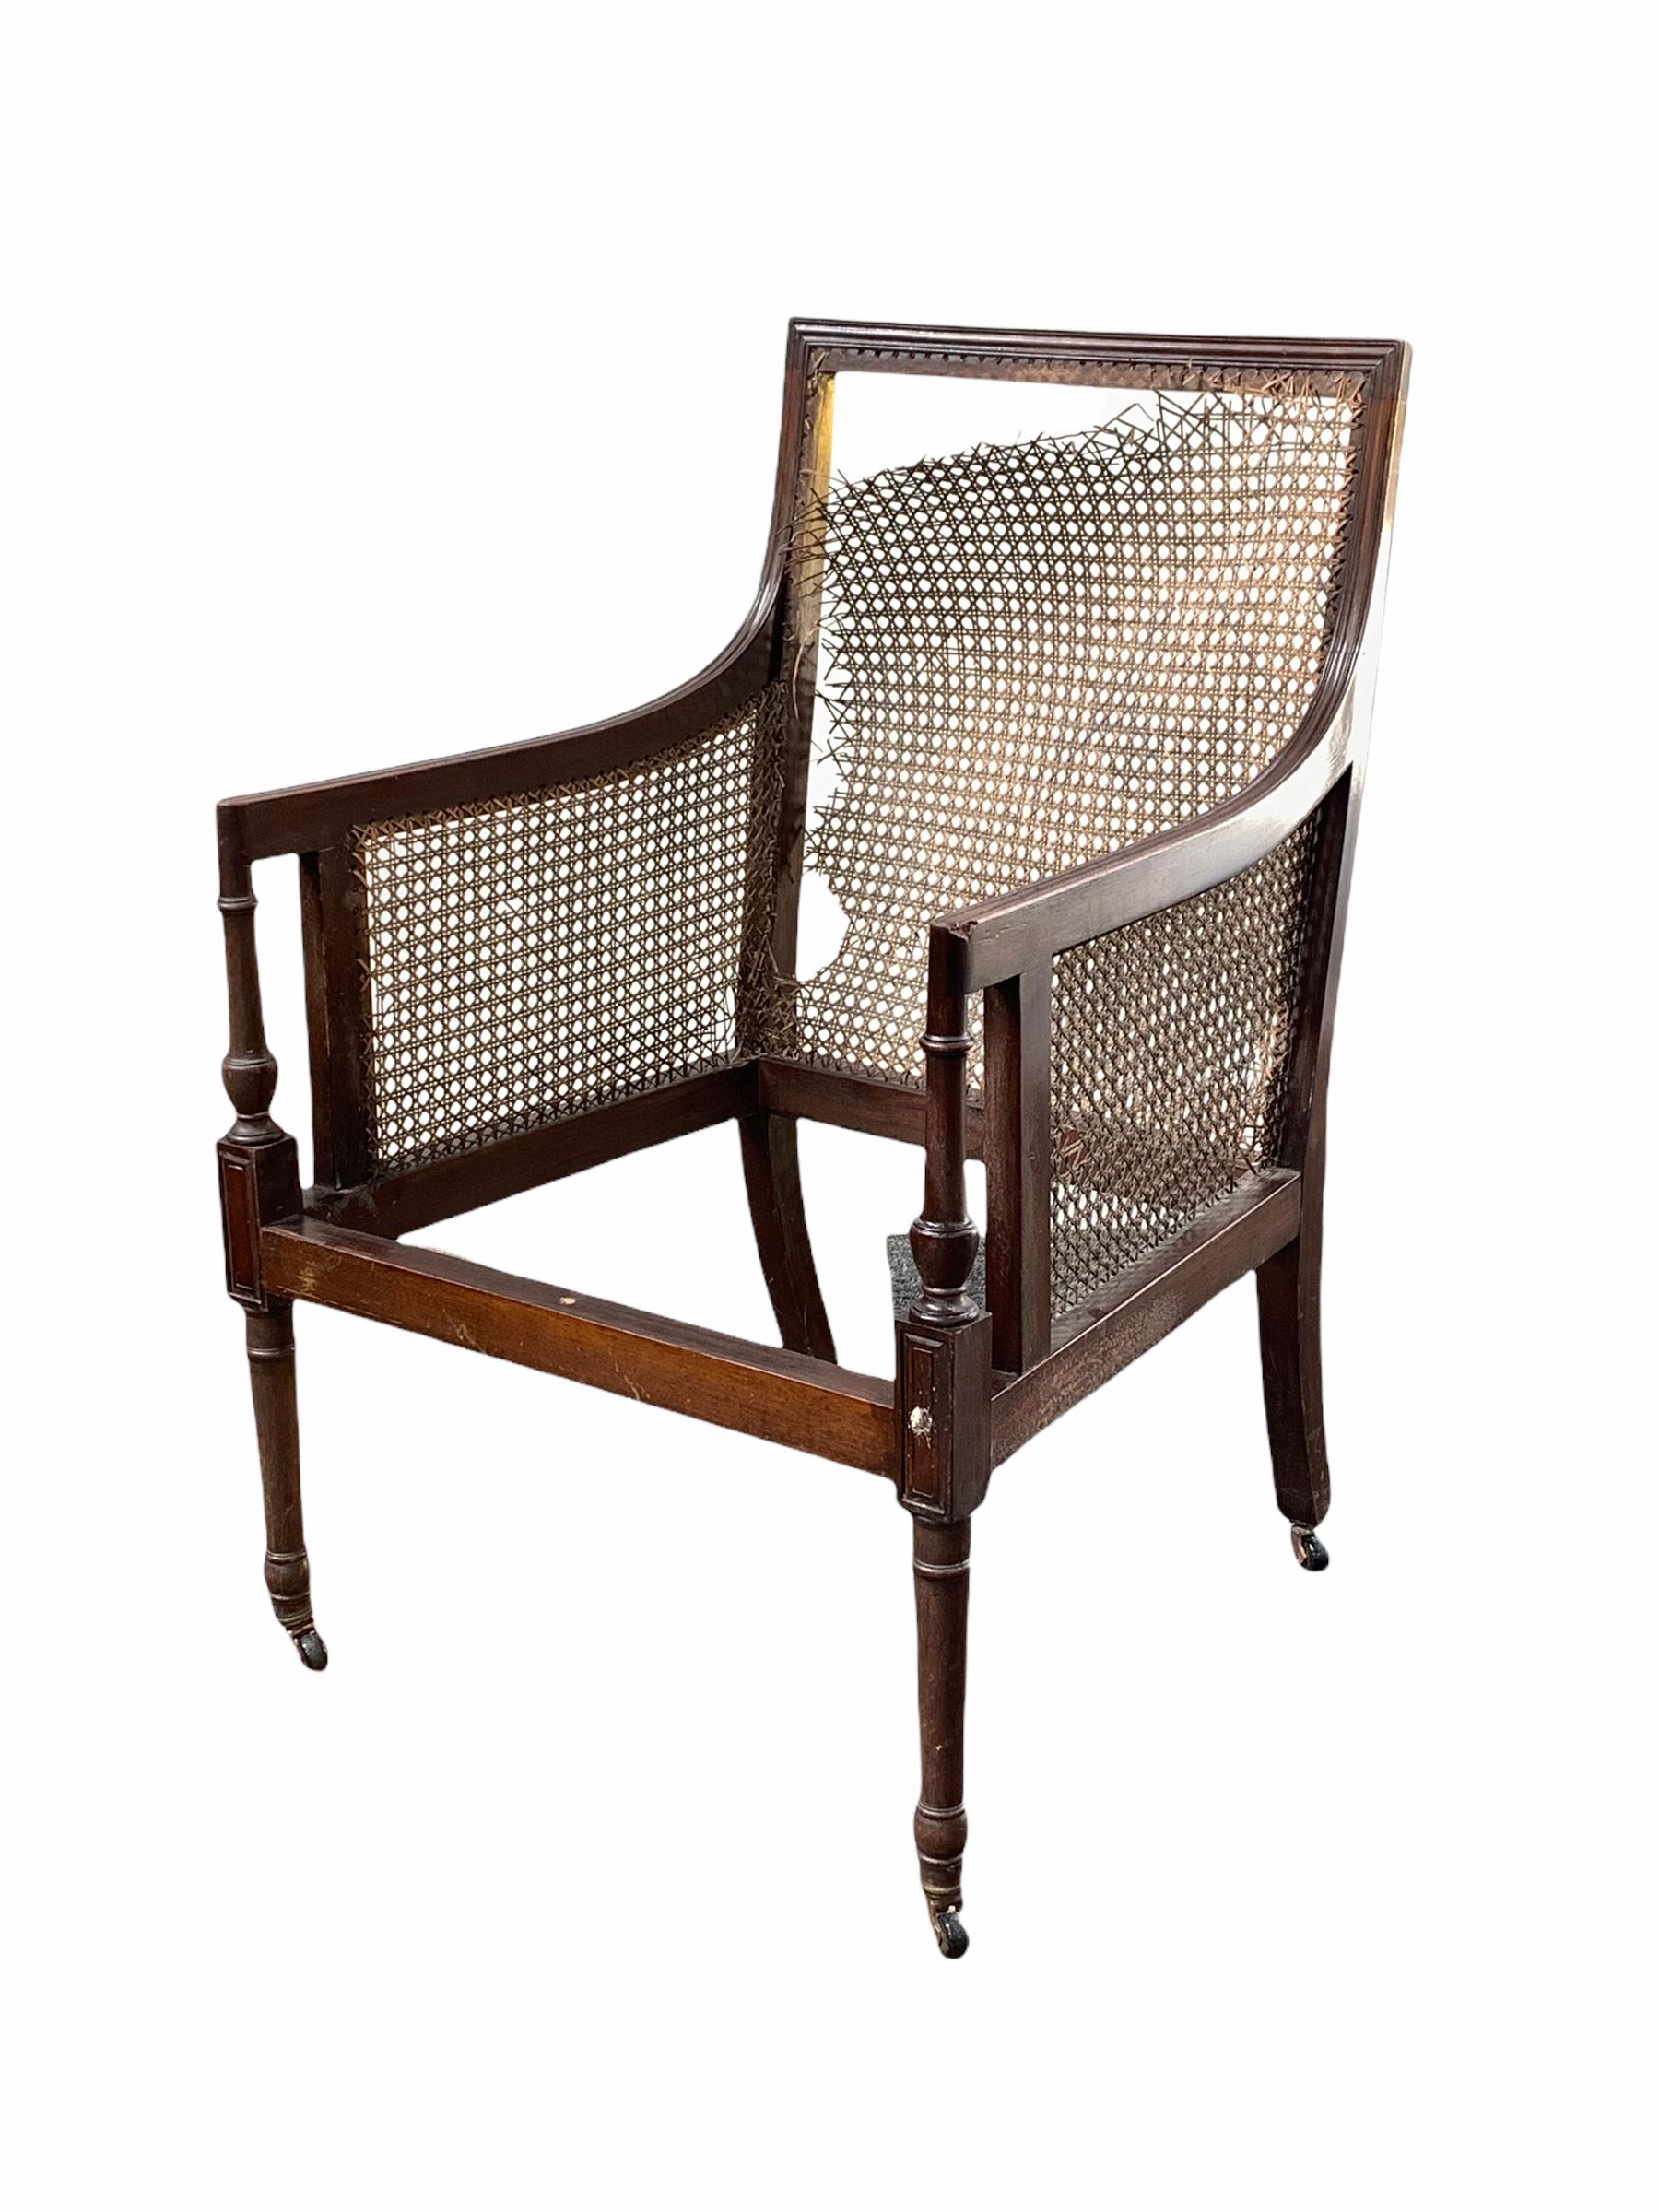 Early 20th century Regency design mahogany elbow chair